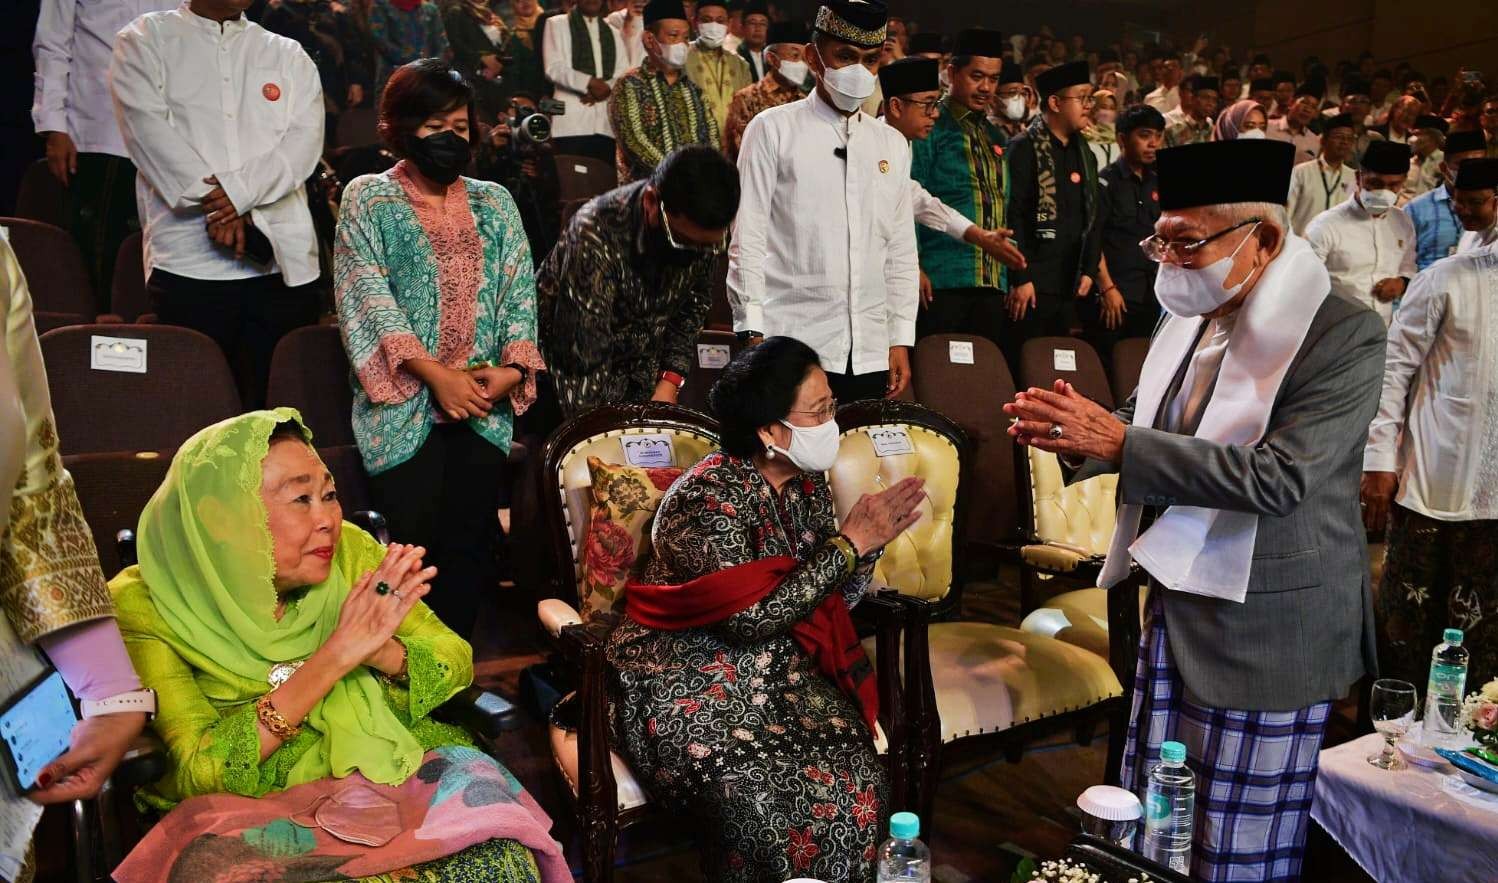 Wakil Presiden (Wapres) K.H. Ma’ruf Amin menghadiri Anugerah Satu Abad NU di Teater Tanah Airku, Taman Mini Indonesia Indah (TMII), Jakarta, Selasa 31 Januari 2023 malam. (Foto: BPMI Setwapres)